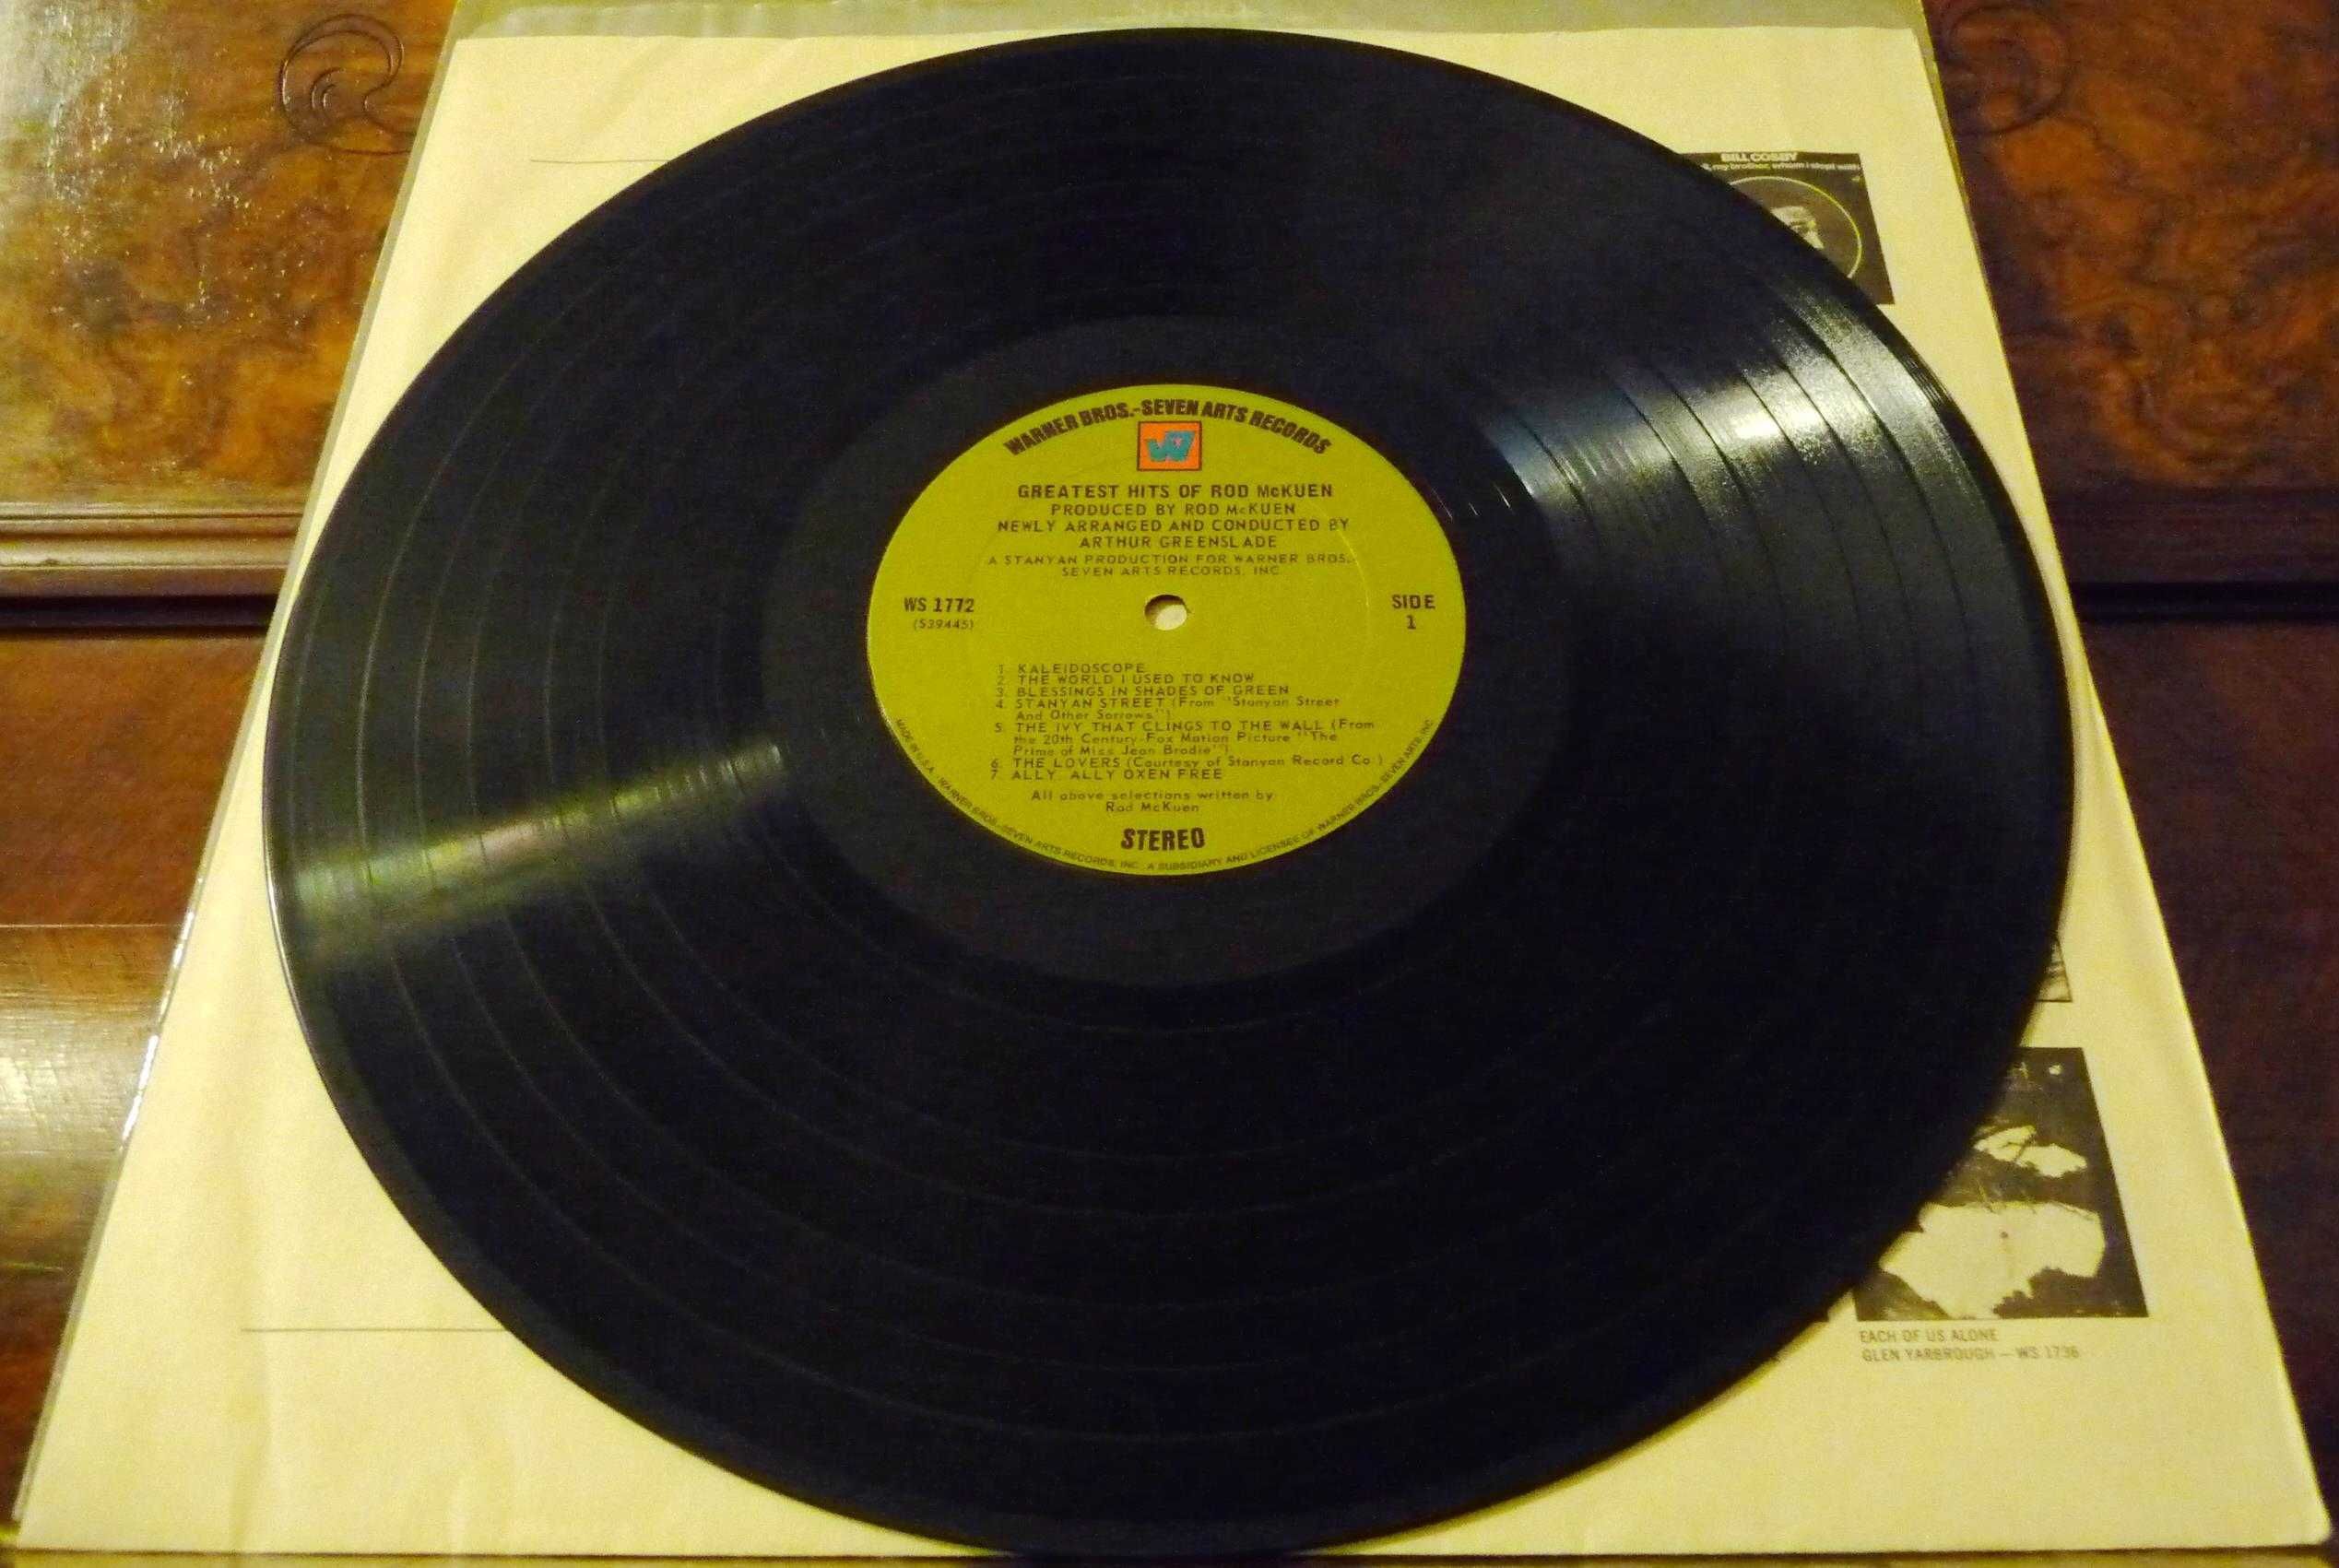 Виниловая пластинка оригинл (US)=ROD McKUEN= '74 *Greatest Hits Of Rod